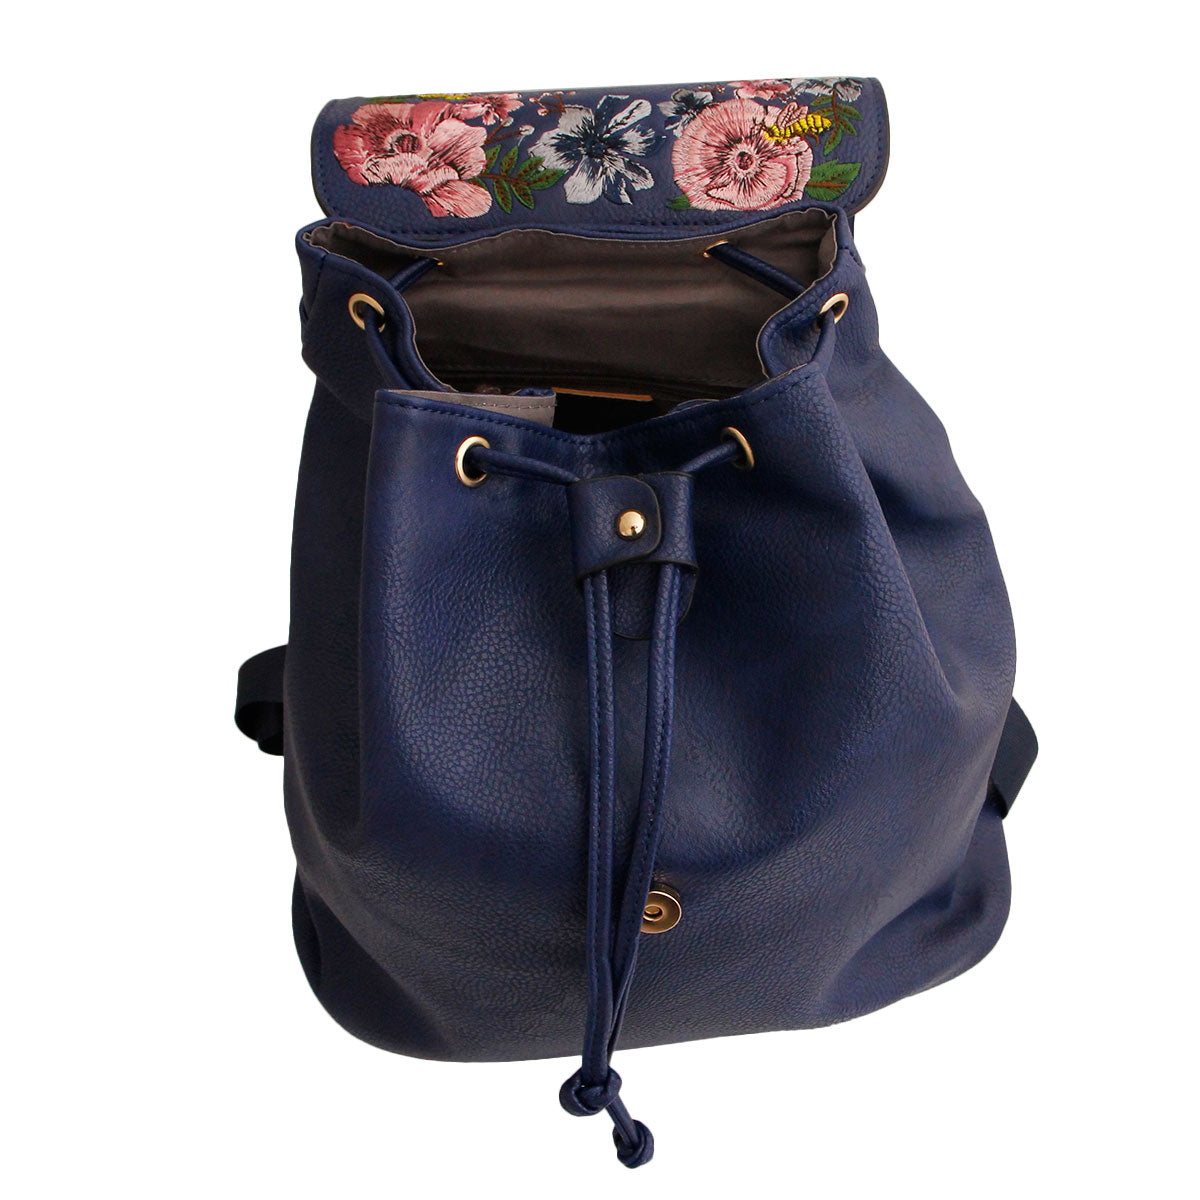 Blue Embroidered Flower Backpack